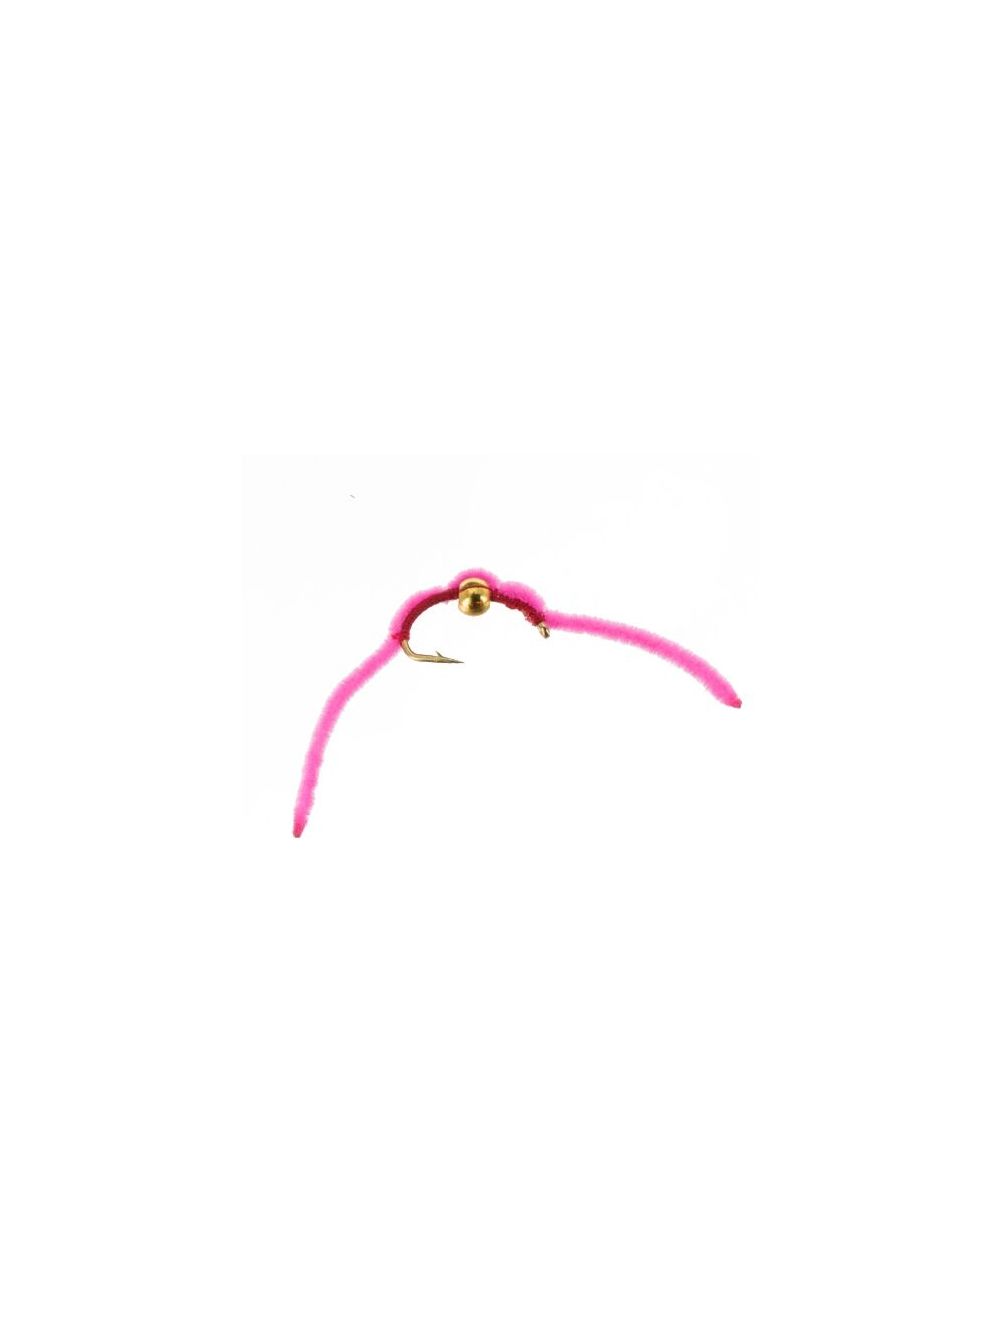 Beadhead San Juan Worm, Pink